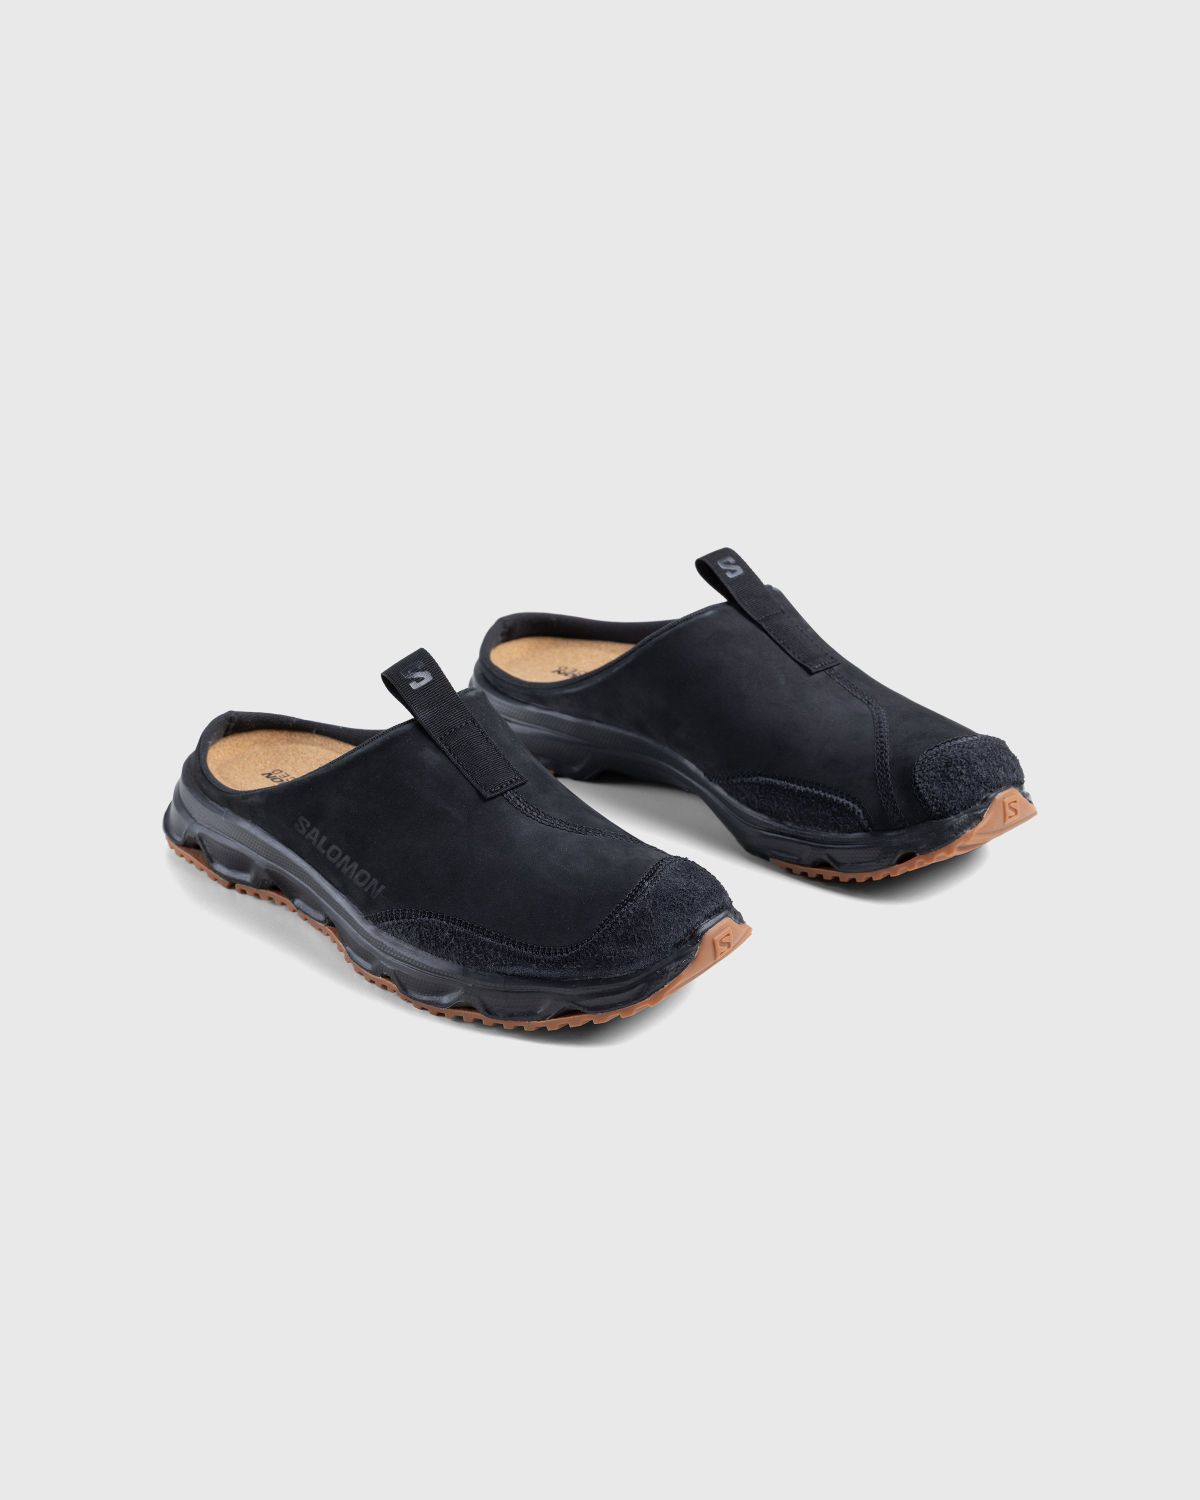 Salomon – RX Slide Leather Advanced Black - Mules - Black - Image 3